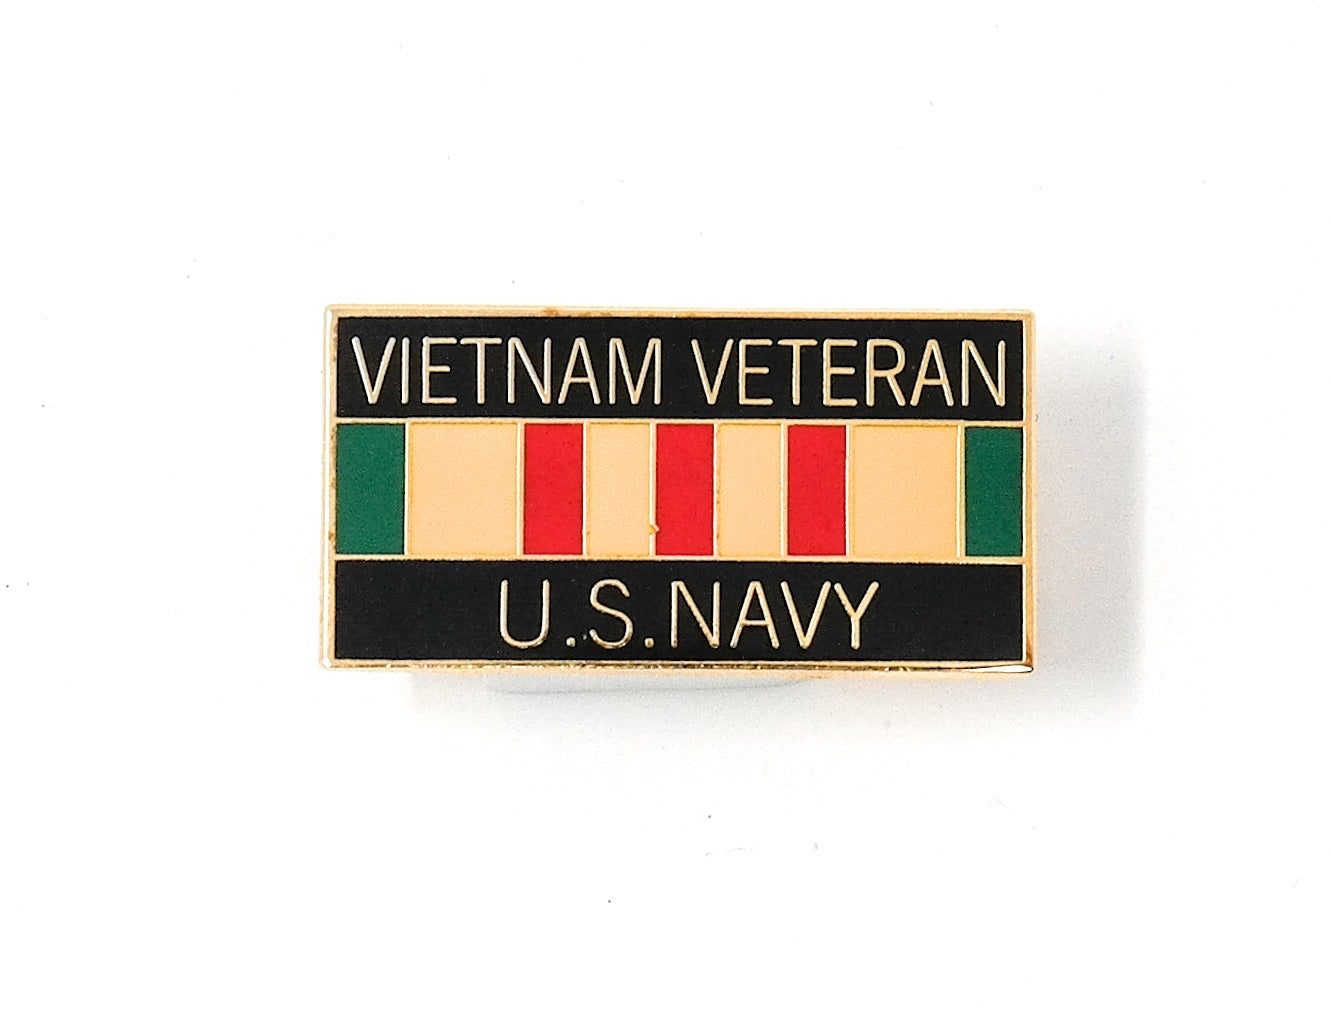 US Navy Vietnam Veteran Collectable Lapel Pin